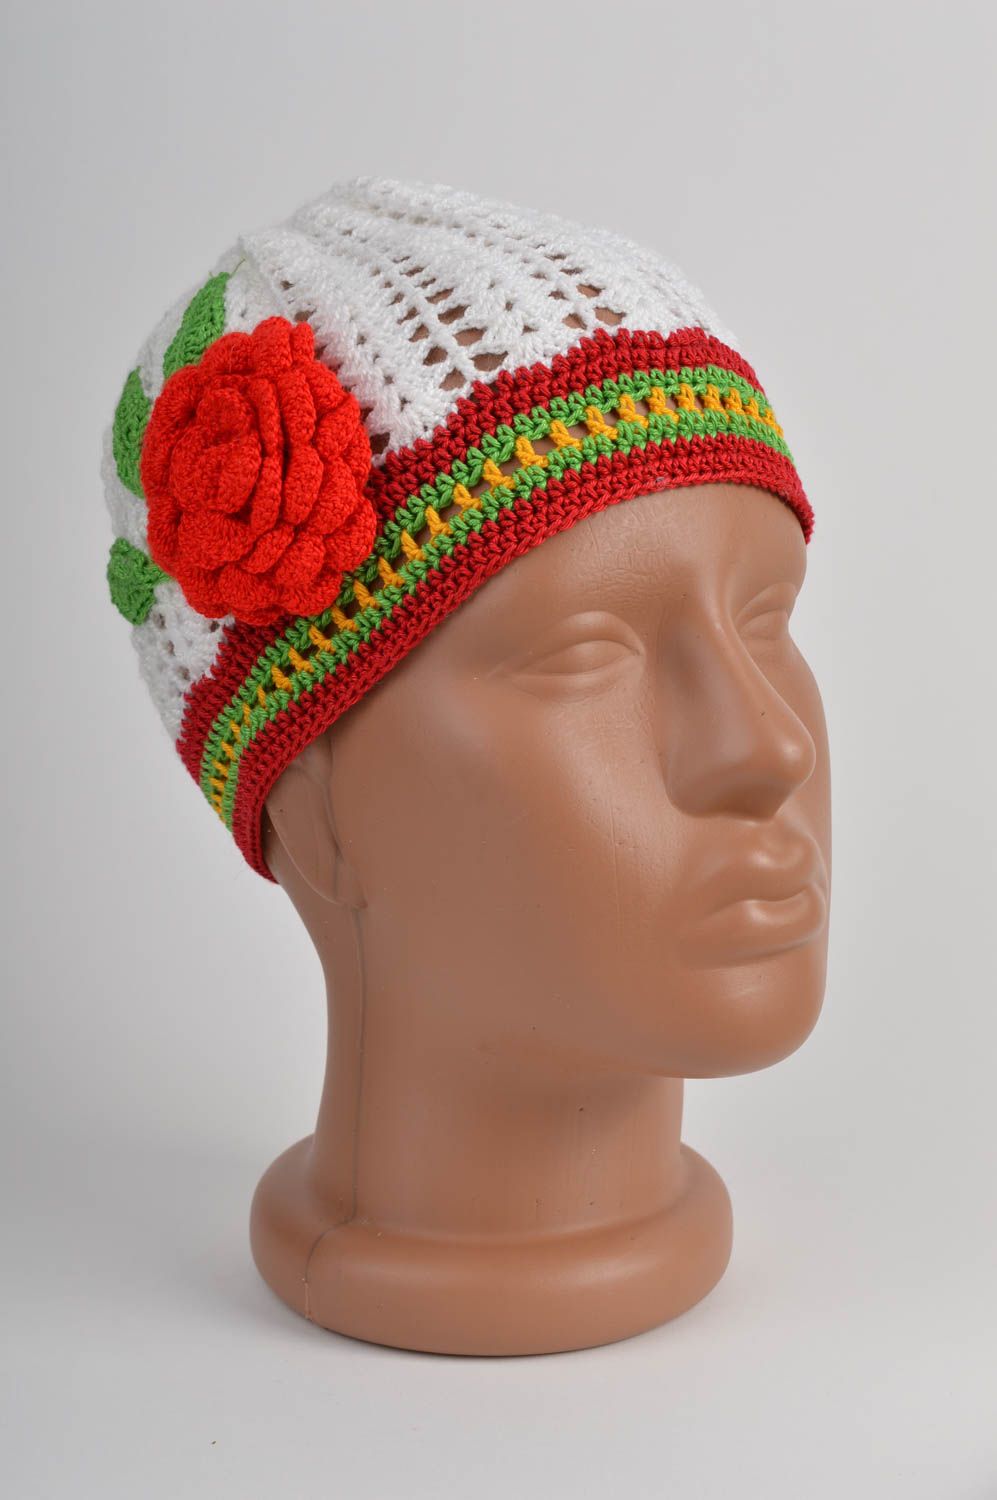 Handmade beautiful crocheted cap cotton warm hat for kids children accessory photo 2